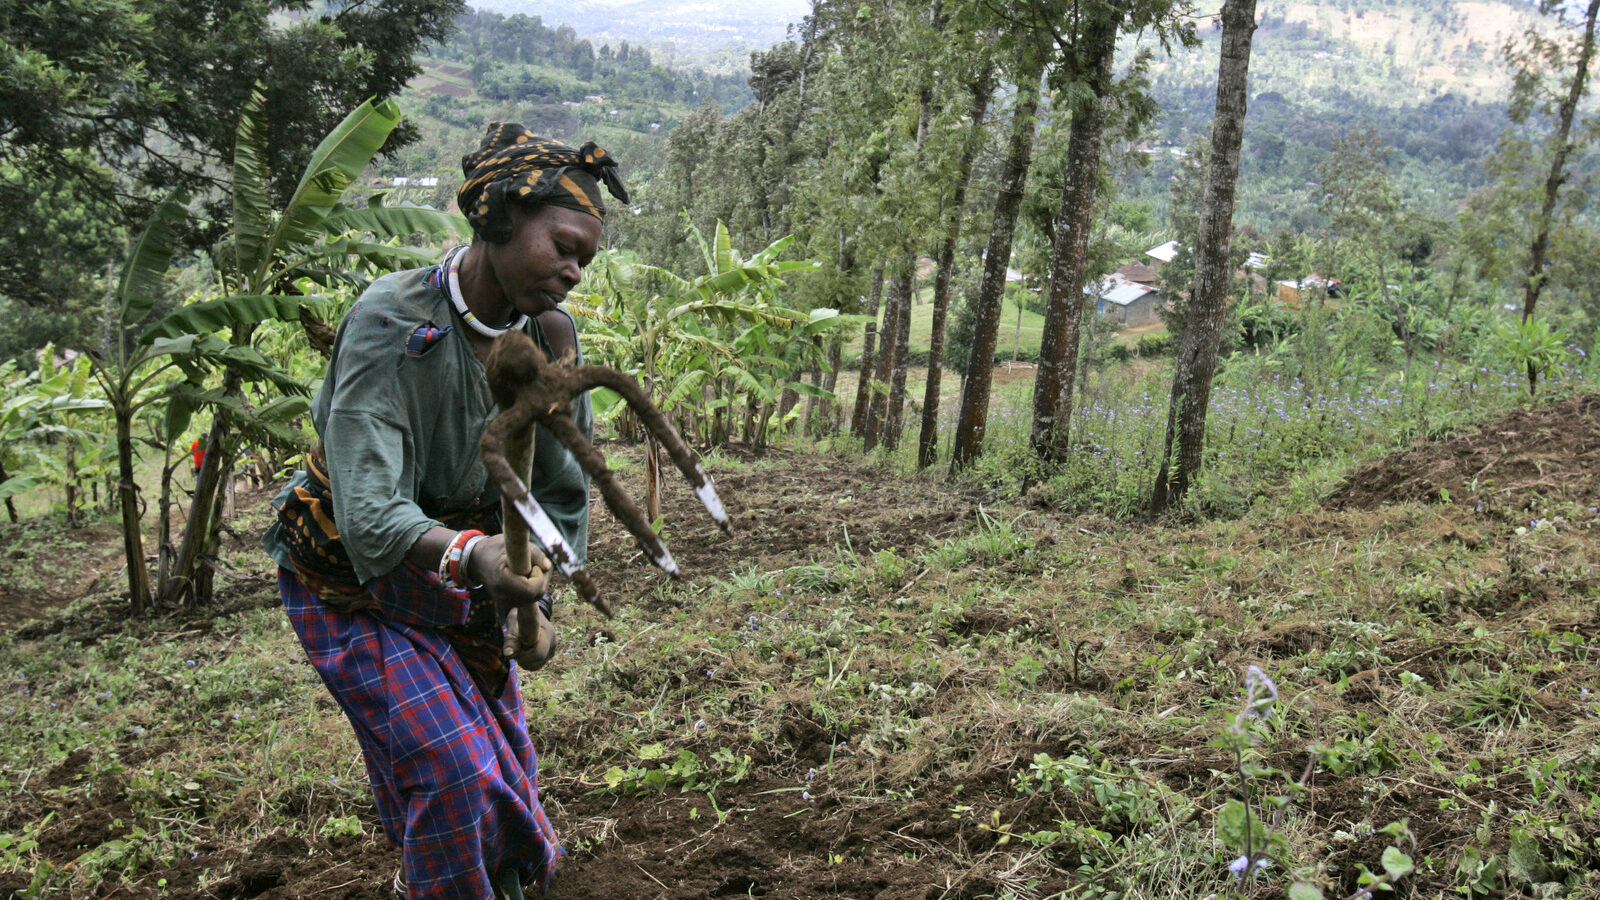 A woman works a field near the Tanzanian town of Arusha. (AP/Karel Prinsloo)